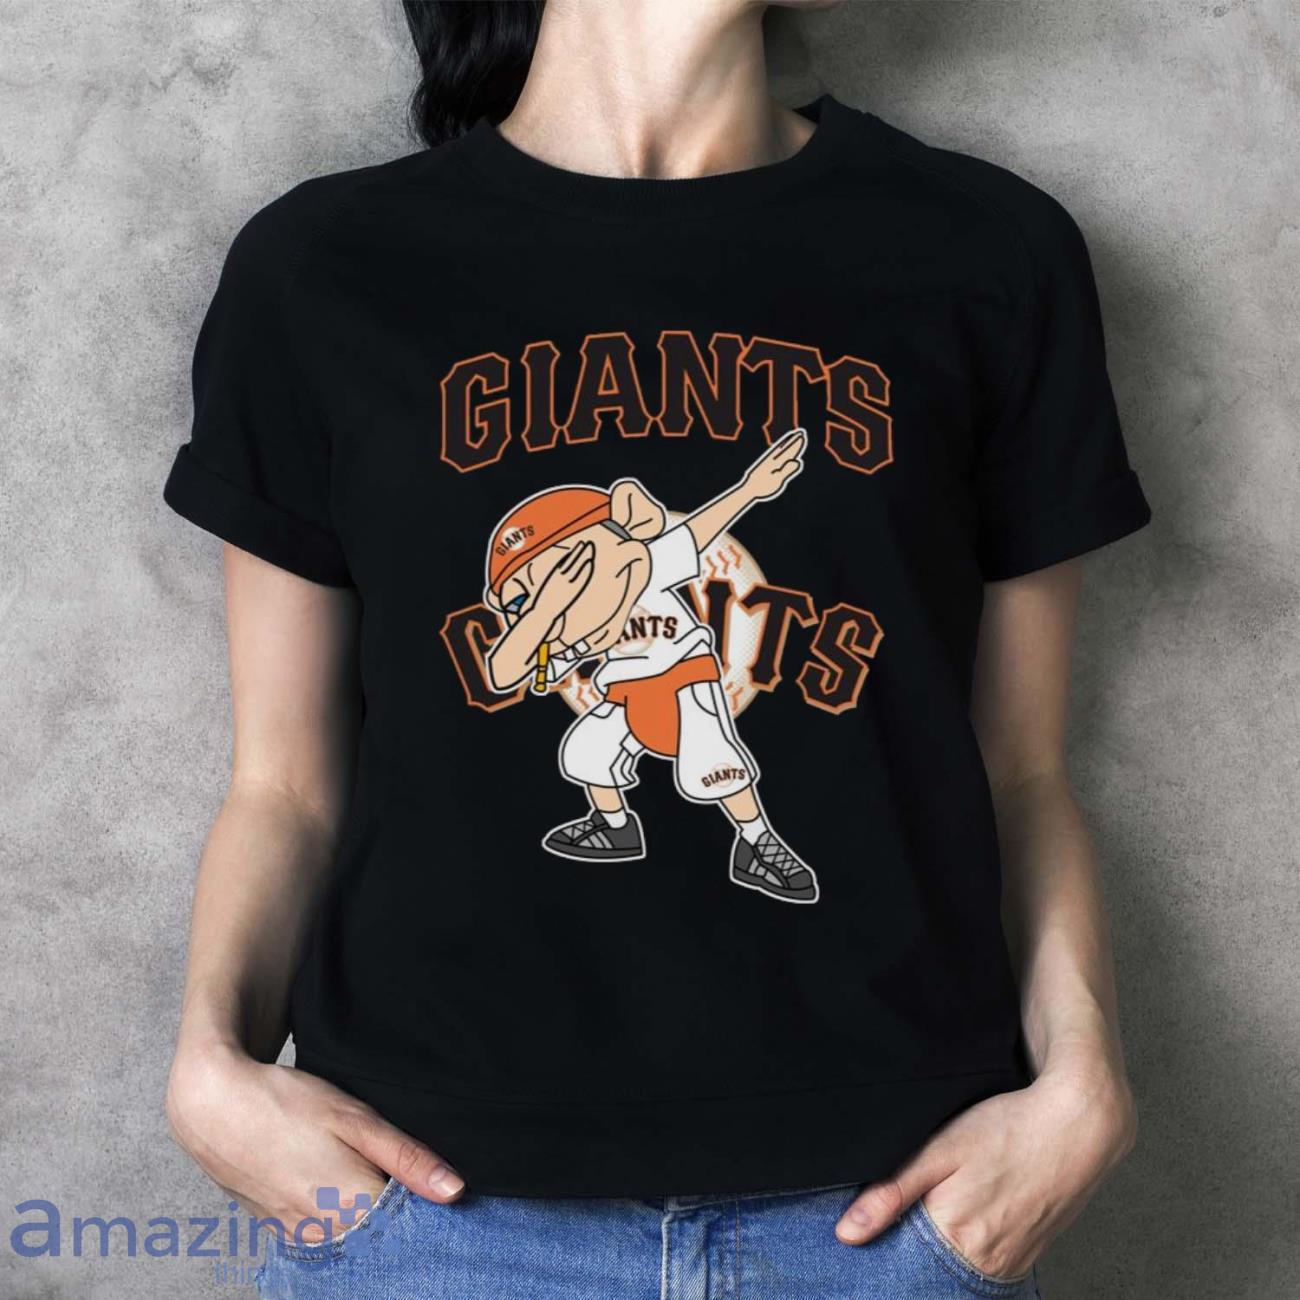 San Francisco Giants Youth Allover Print Long Sleeve T-Shirt